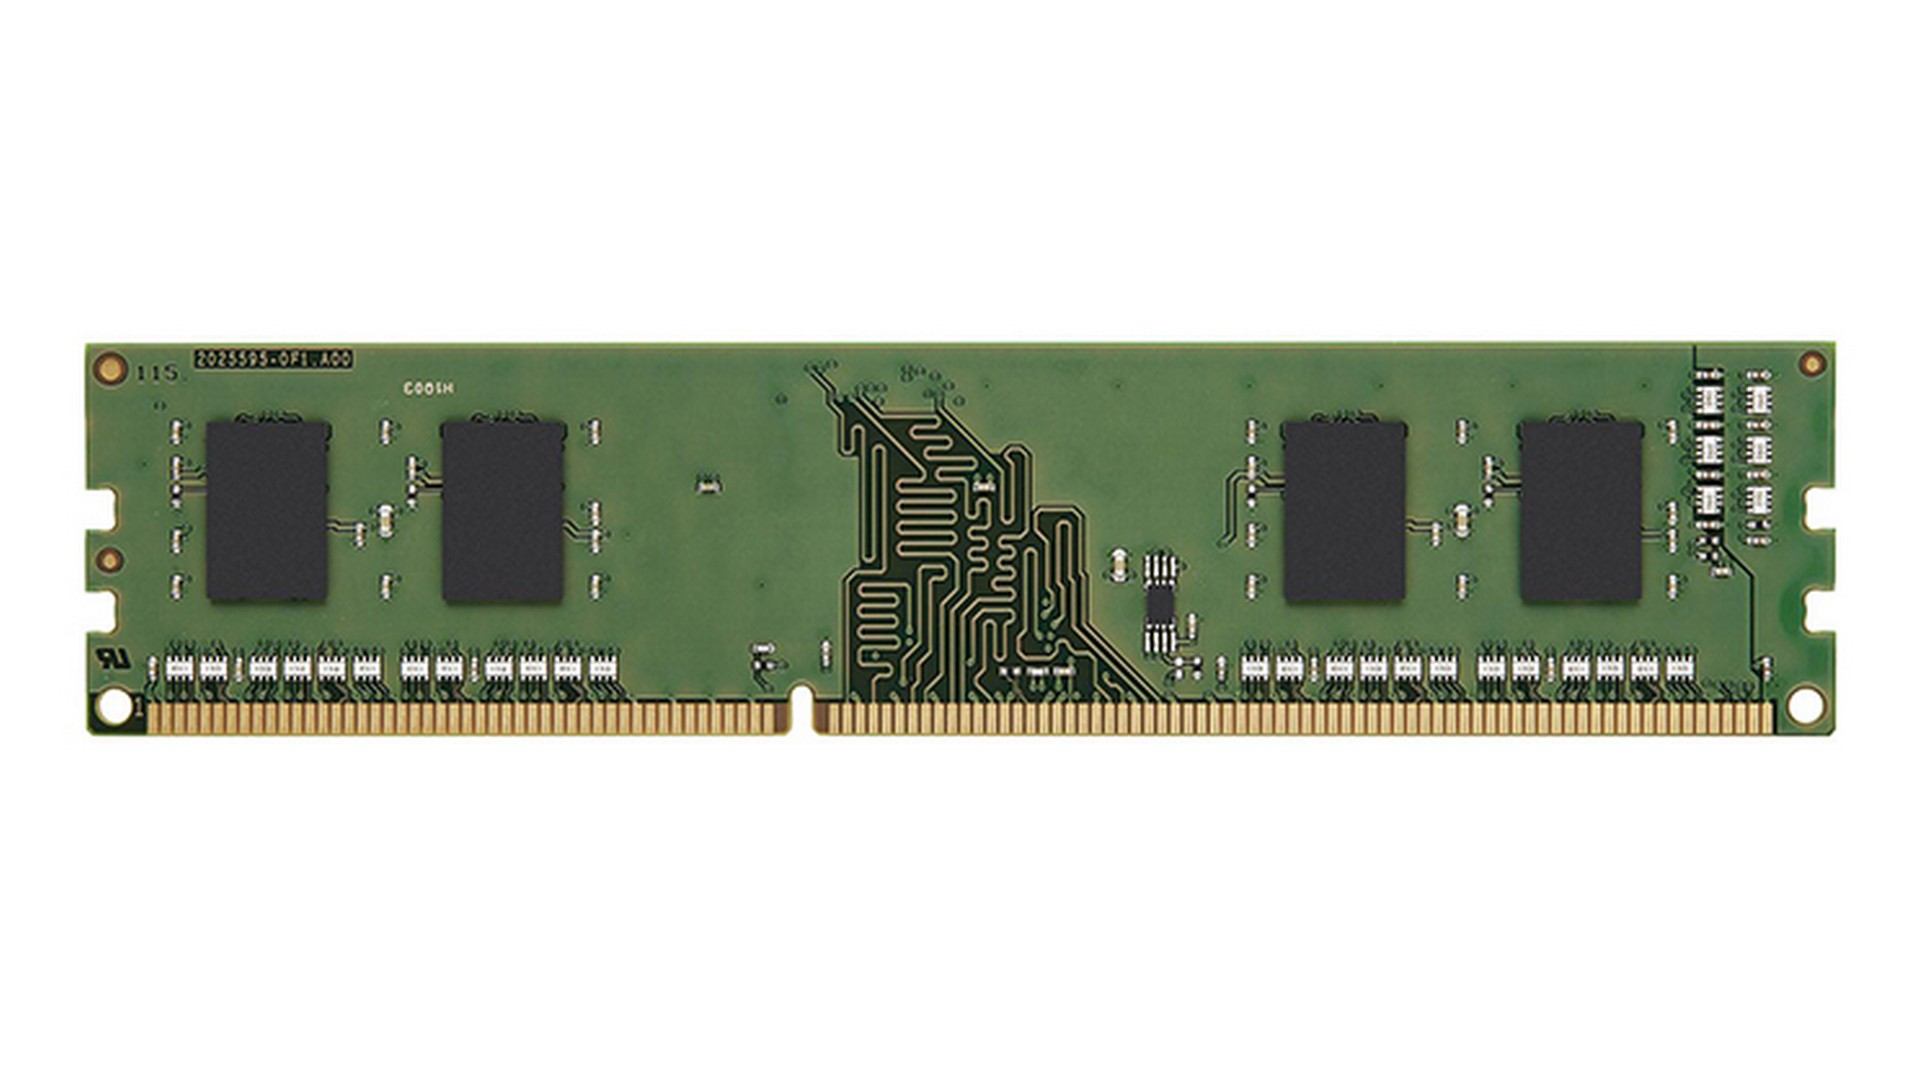 RAM Desktop KINGSTON 8GB (1x8GB) DDR3 1600MHz (KVR16N11/8)